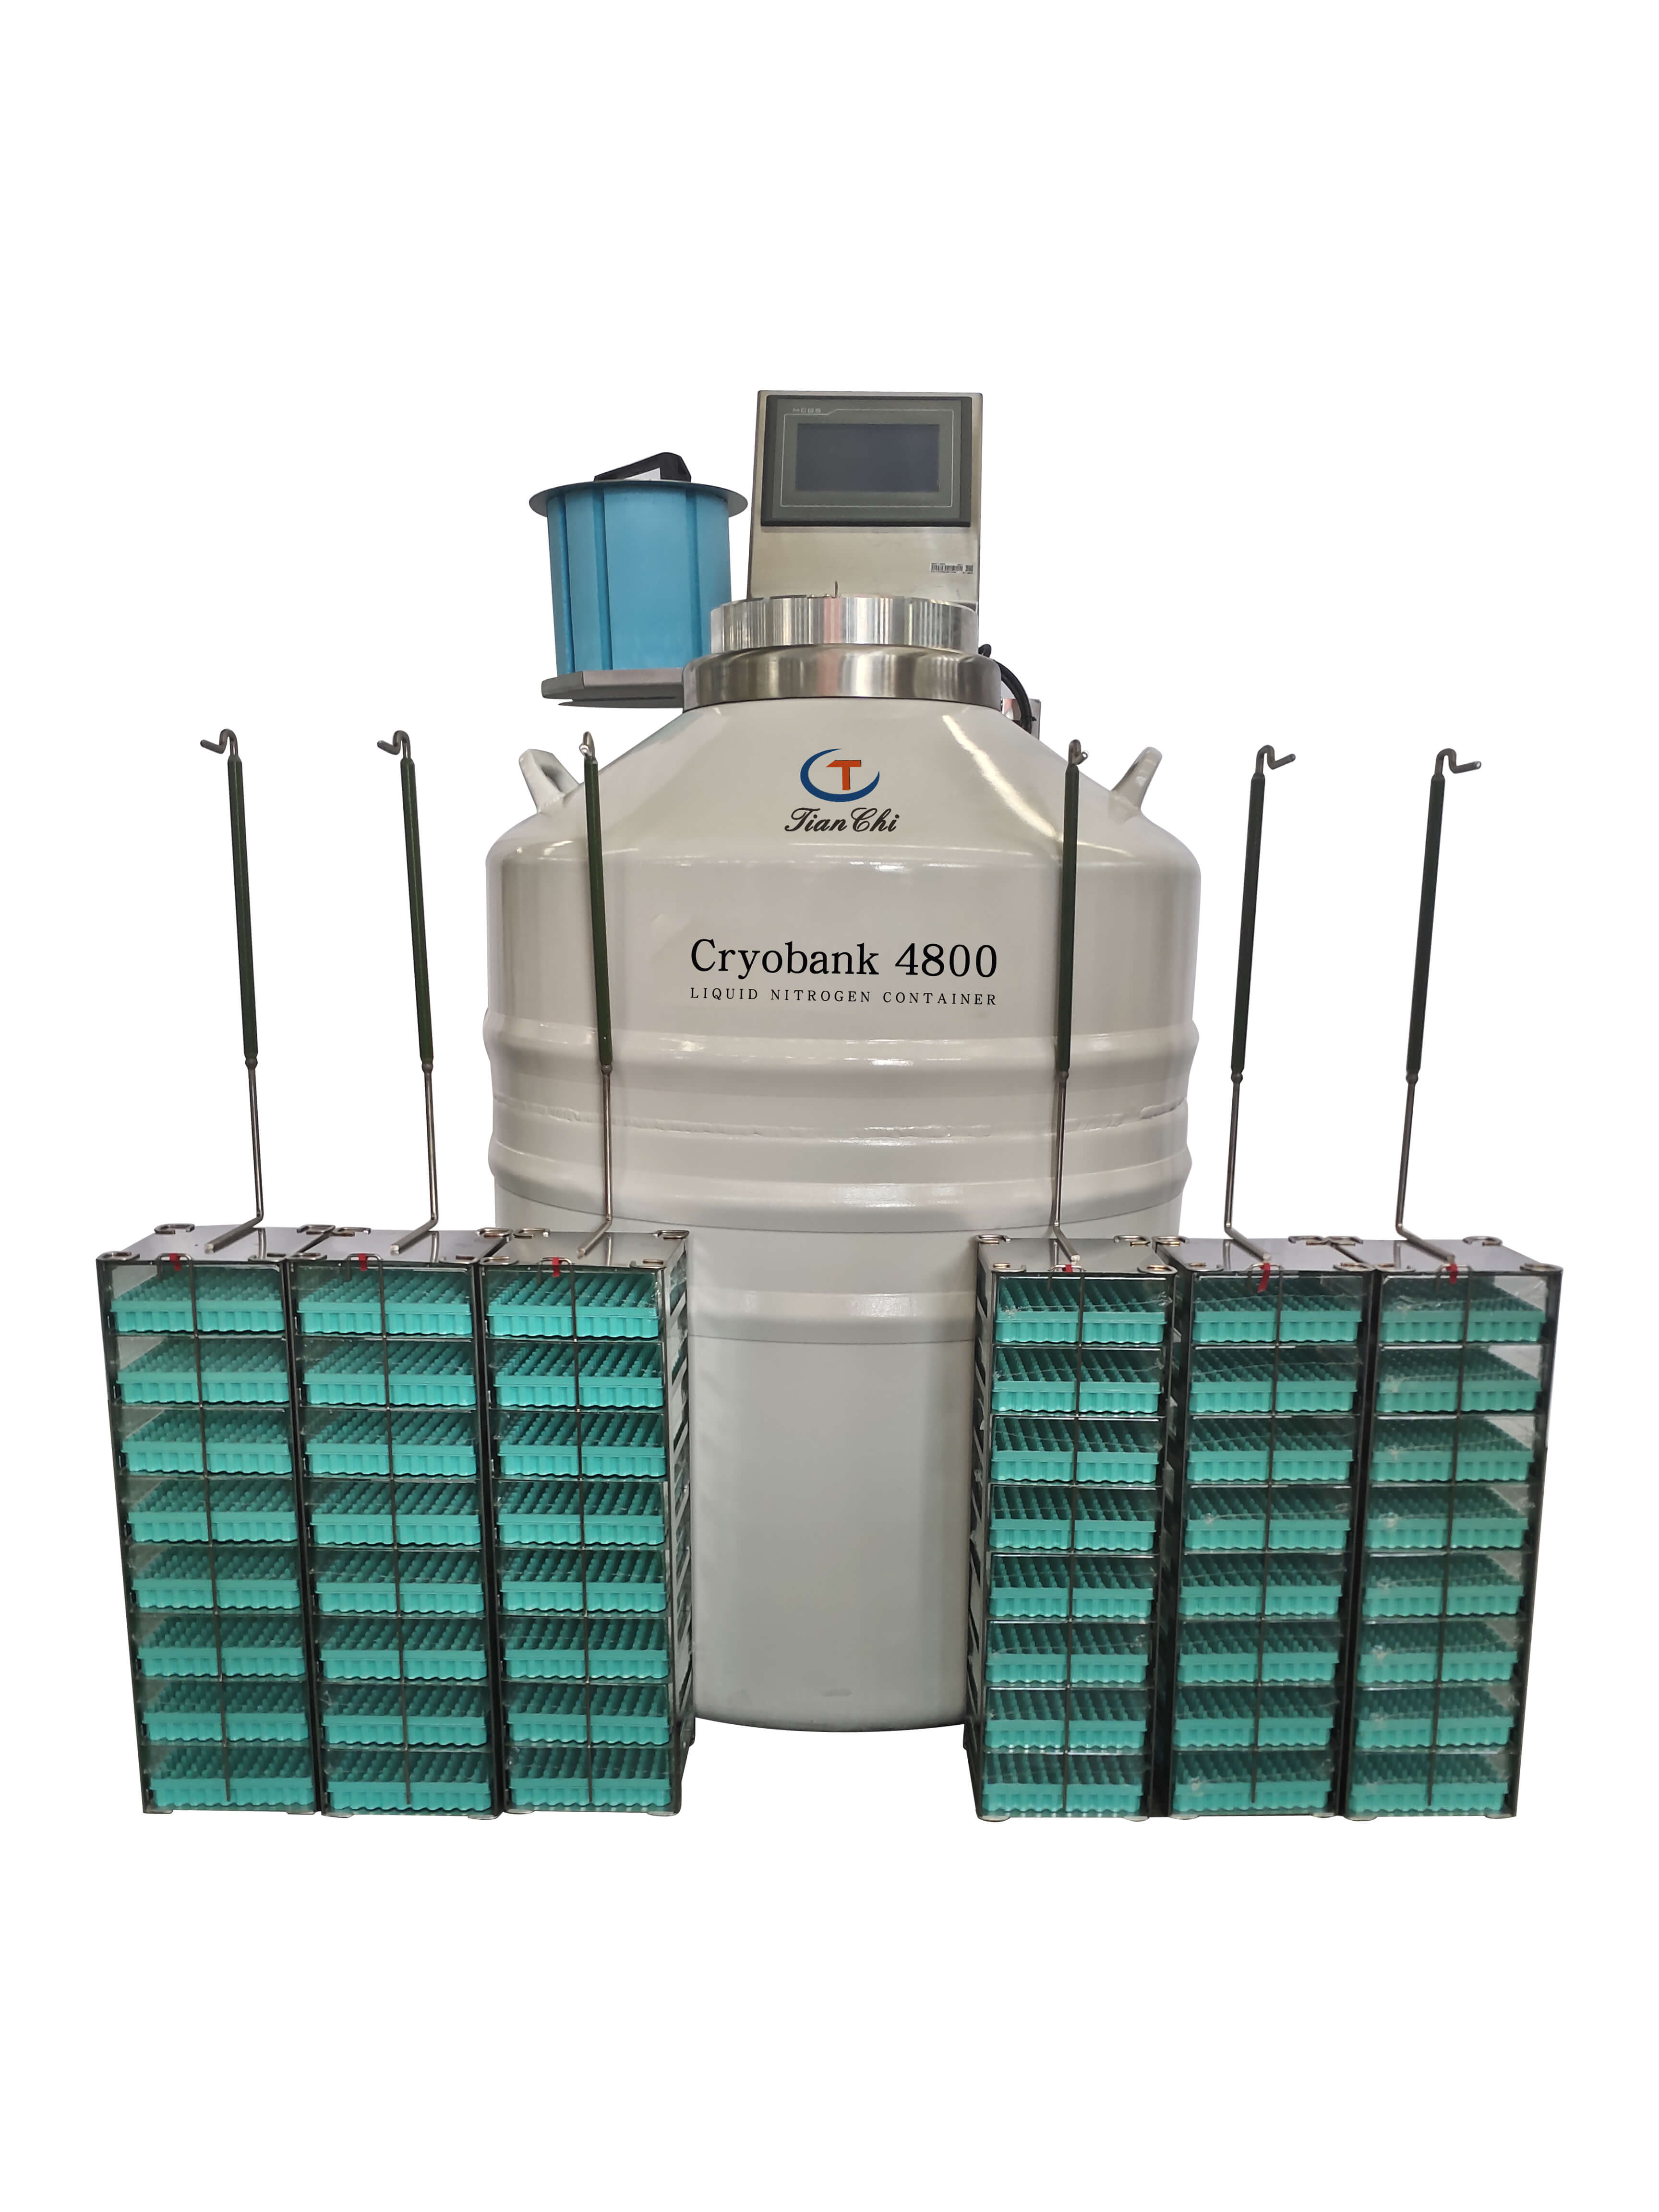 Dubai cryobank bio-bank KGSQ small stem cell tank 95 liters With liquid level monitoring